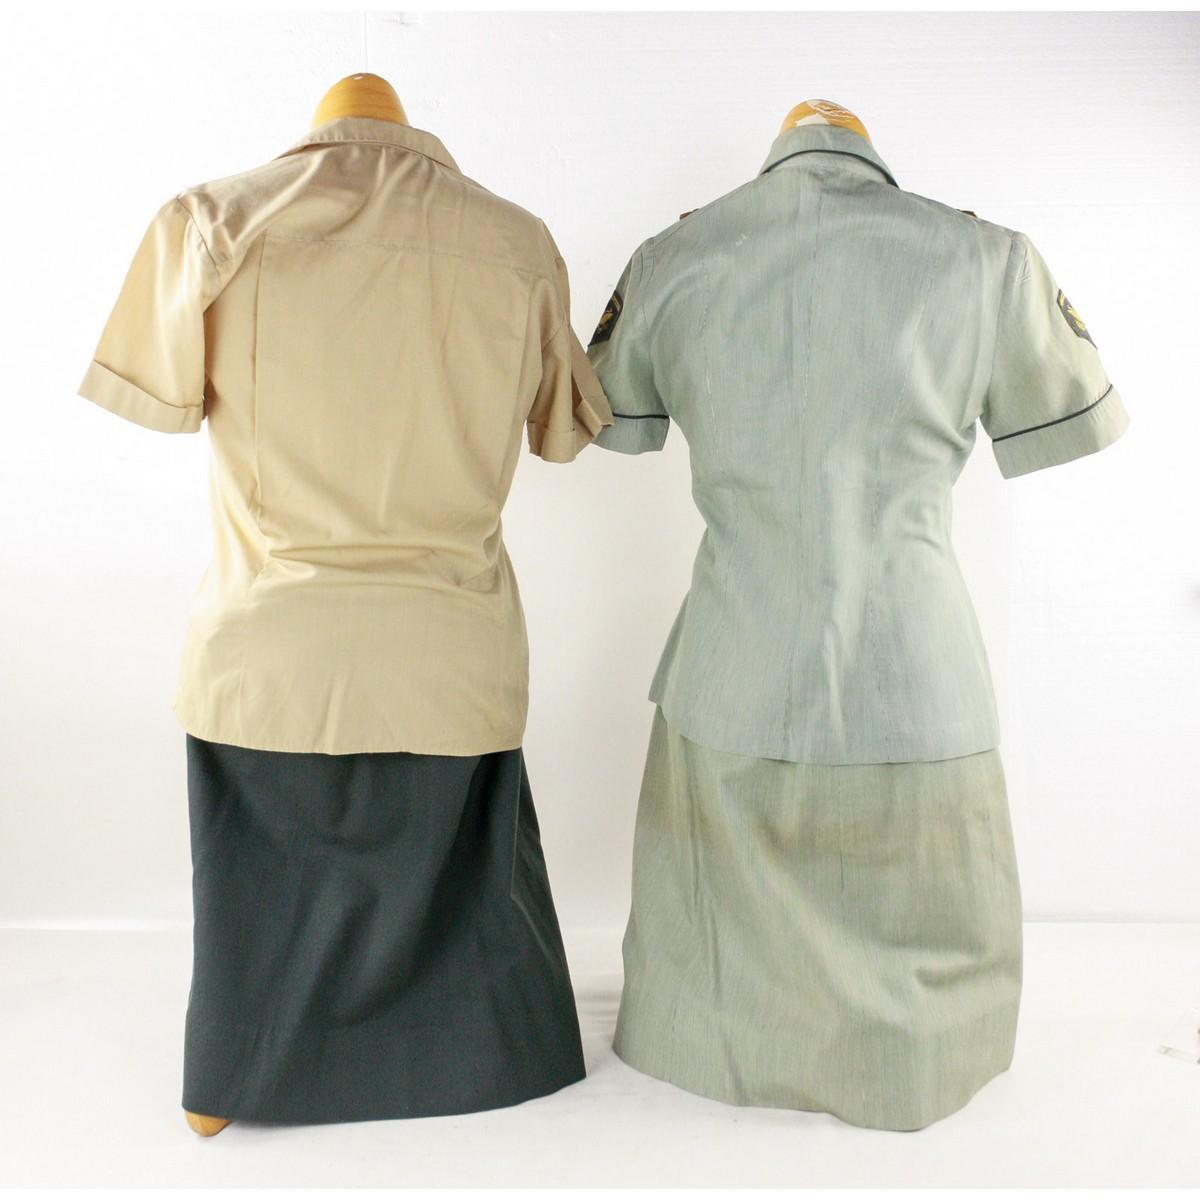 2 US Military Vietnam Era Women's Dresses